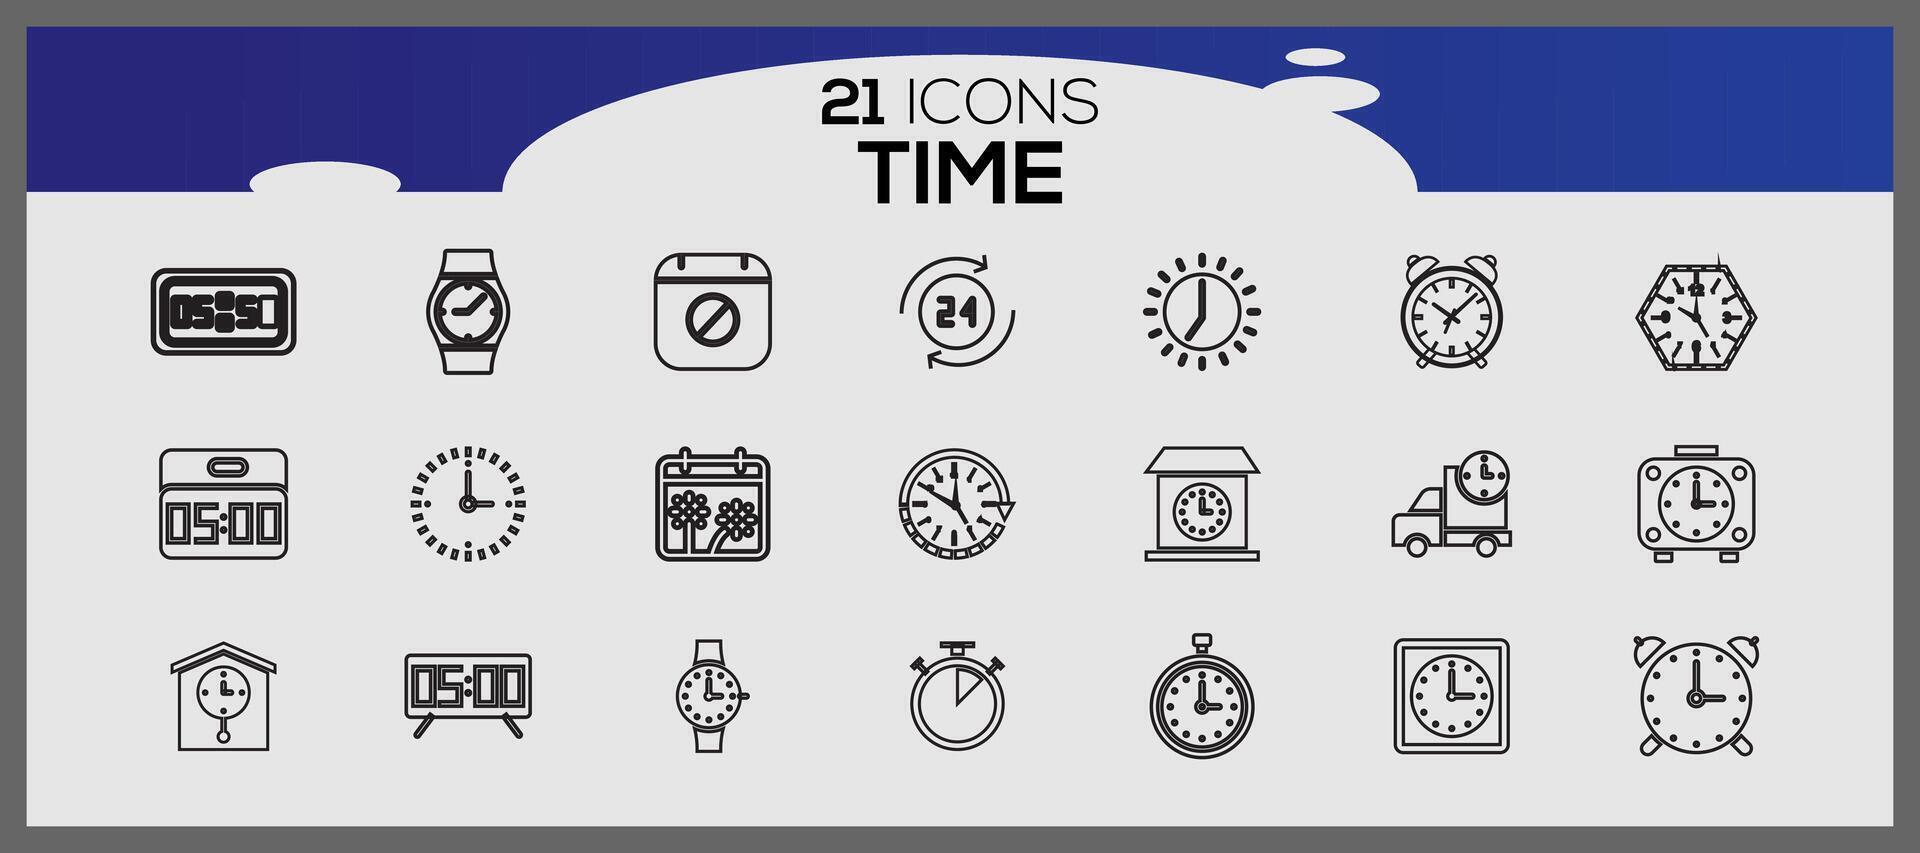 Time icon collection. Time icon set design. vector